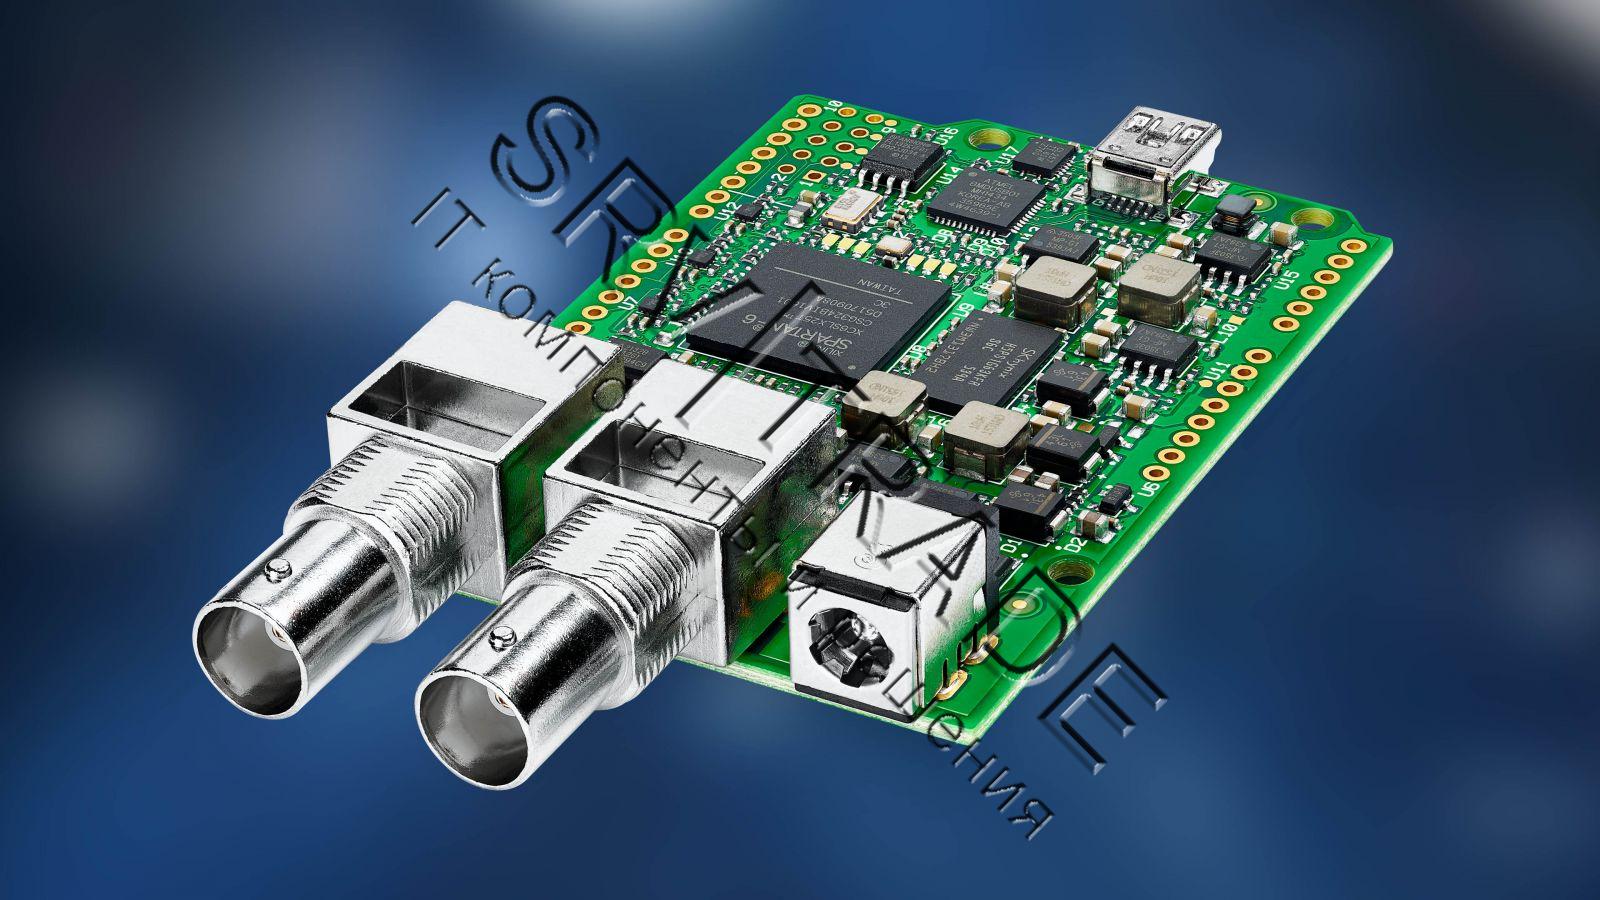 Рекордер CINEURSASHMSSD2 Blackmagic Design 3G-SDI Arduino Shield. Модель позволяет сохранять 12-битн